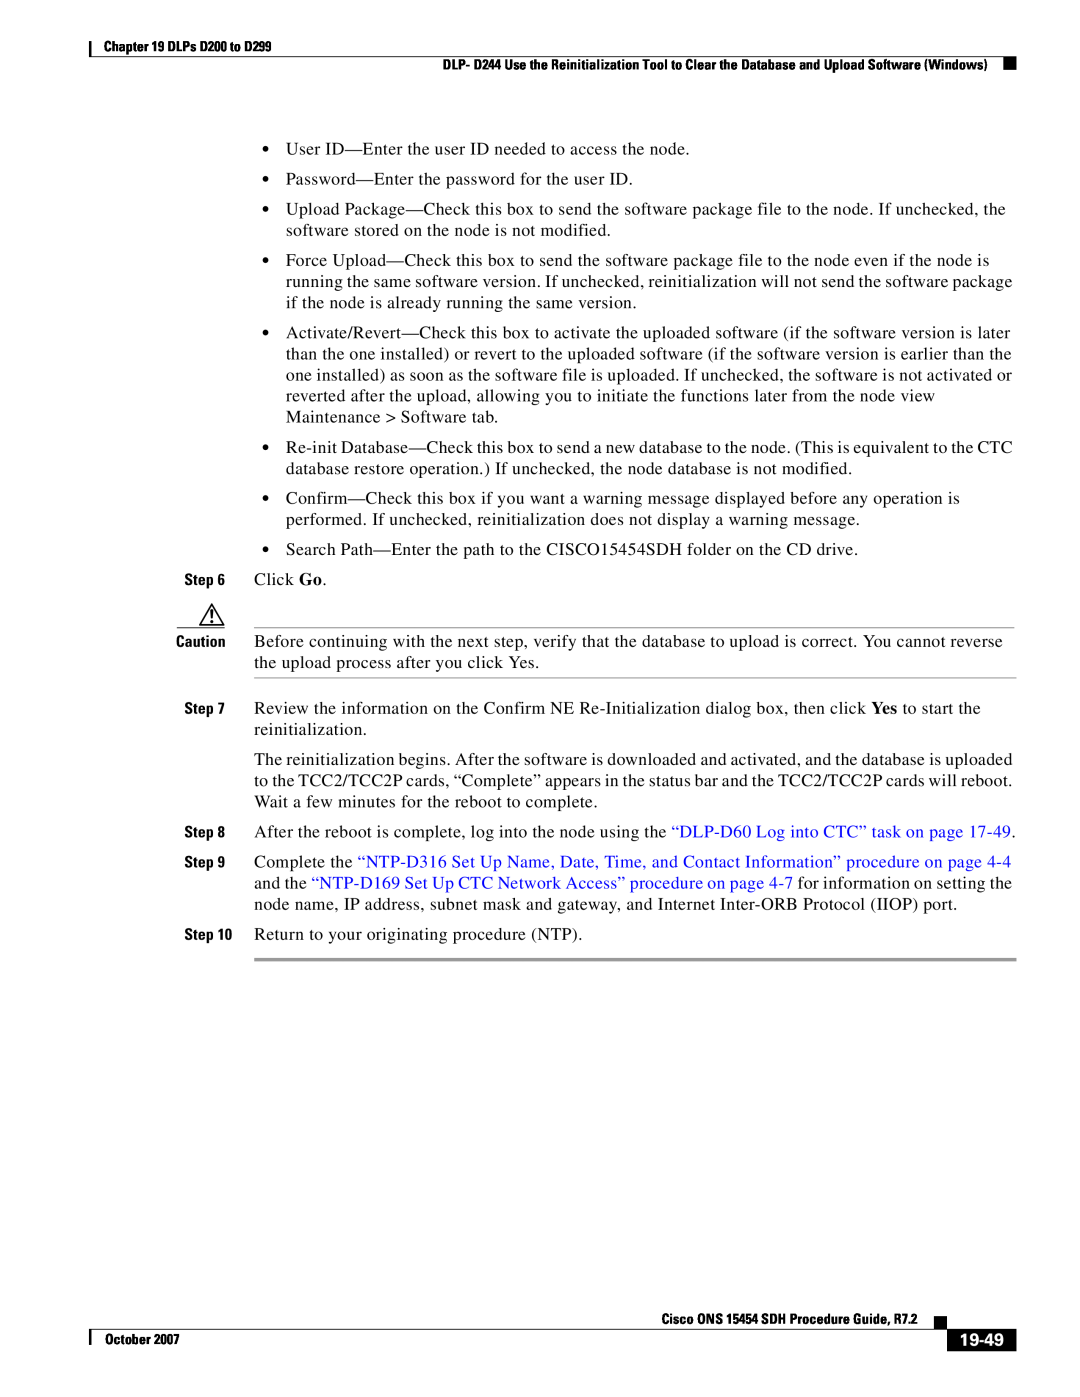 Cisco Systems D200 manual 19-49, Click Go 